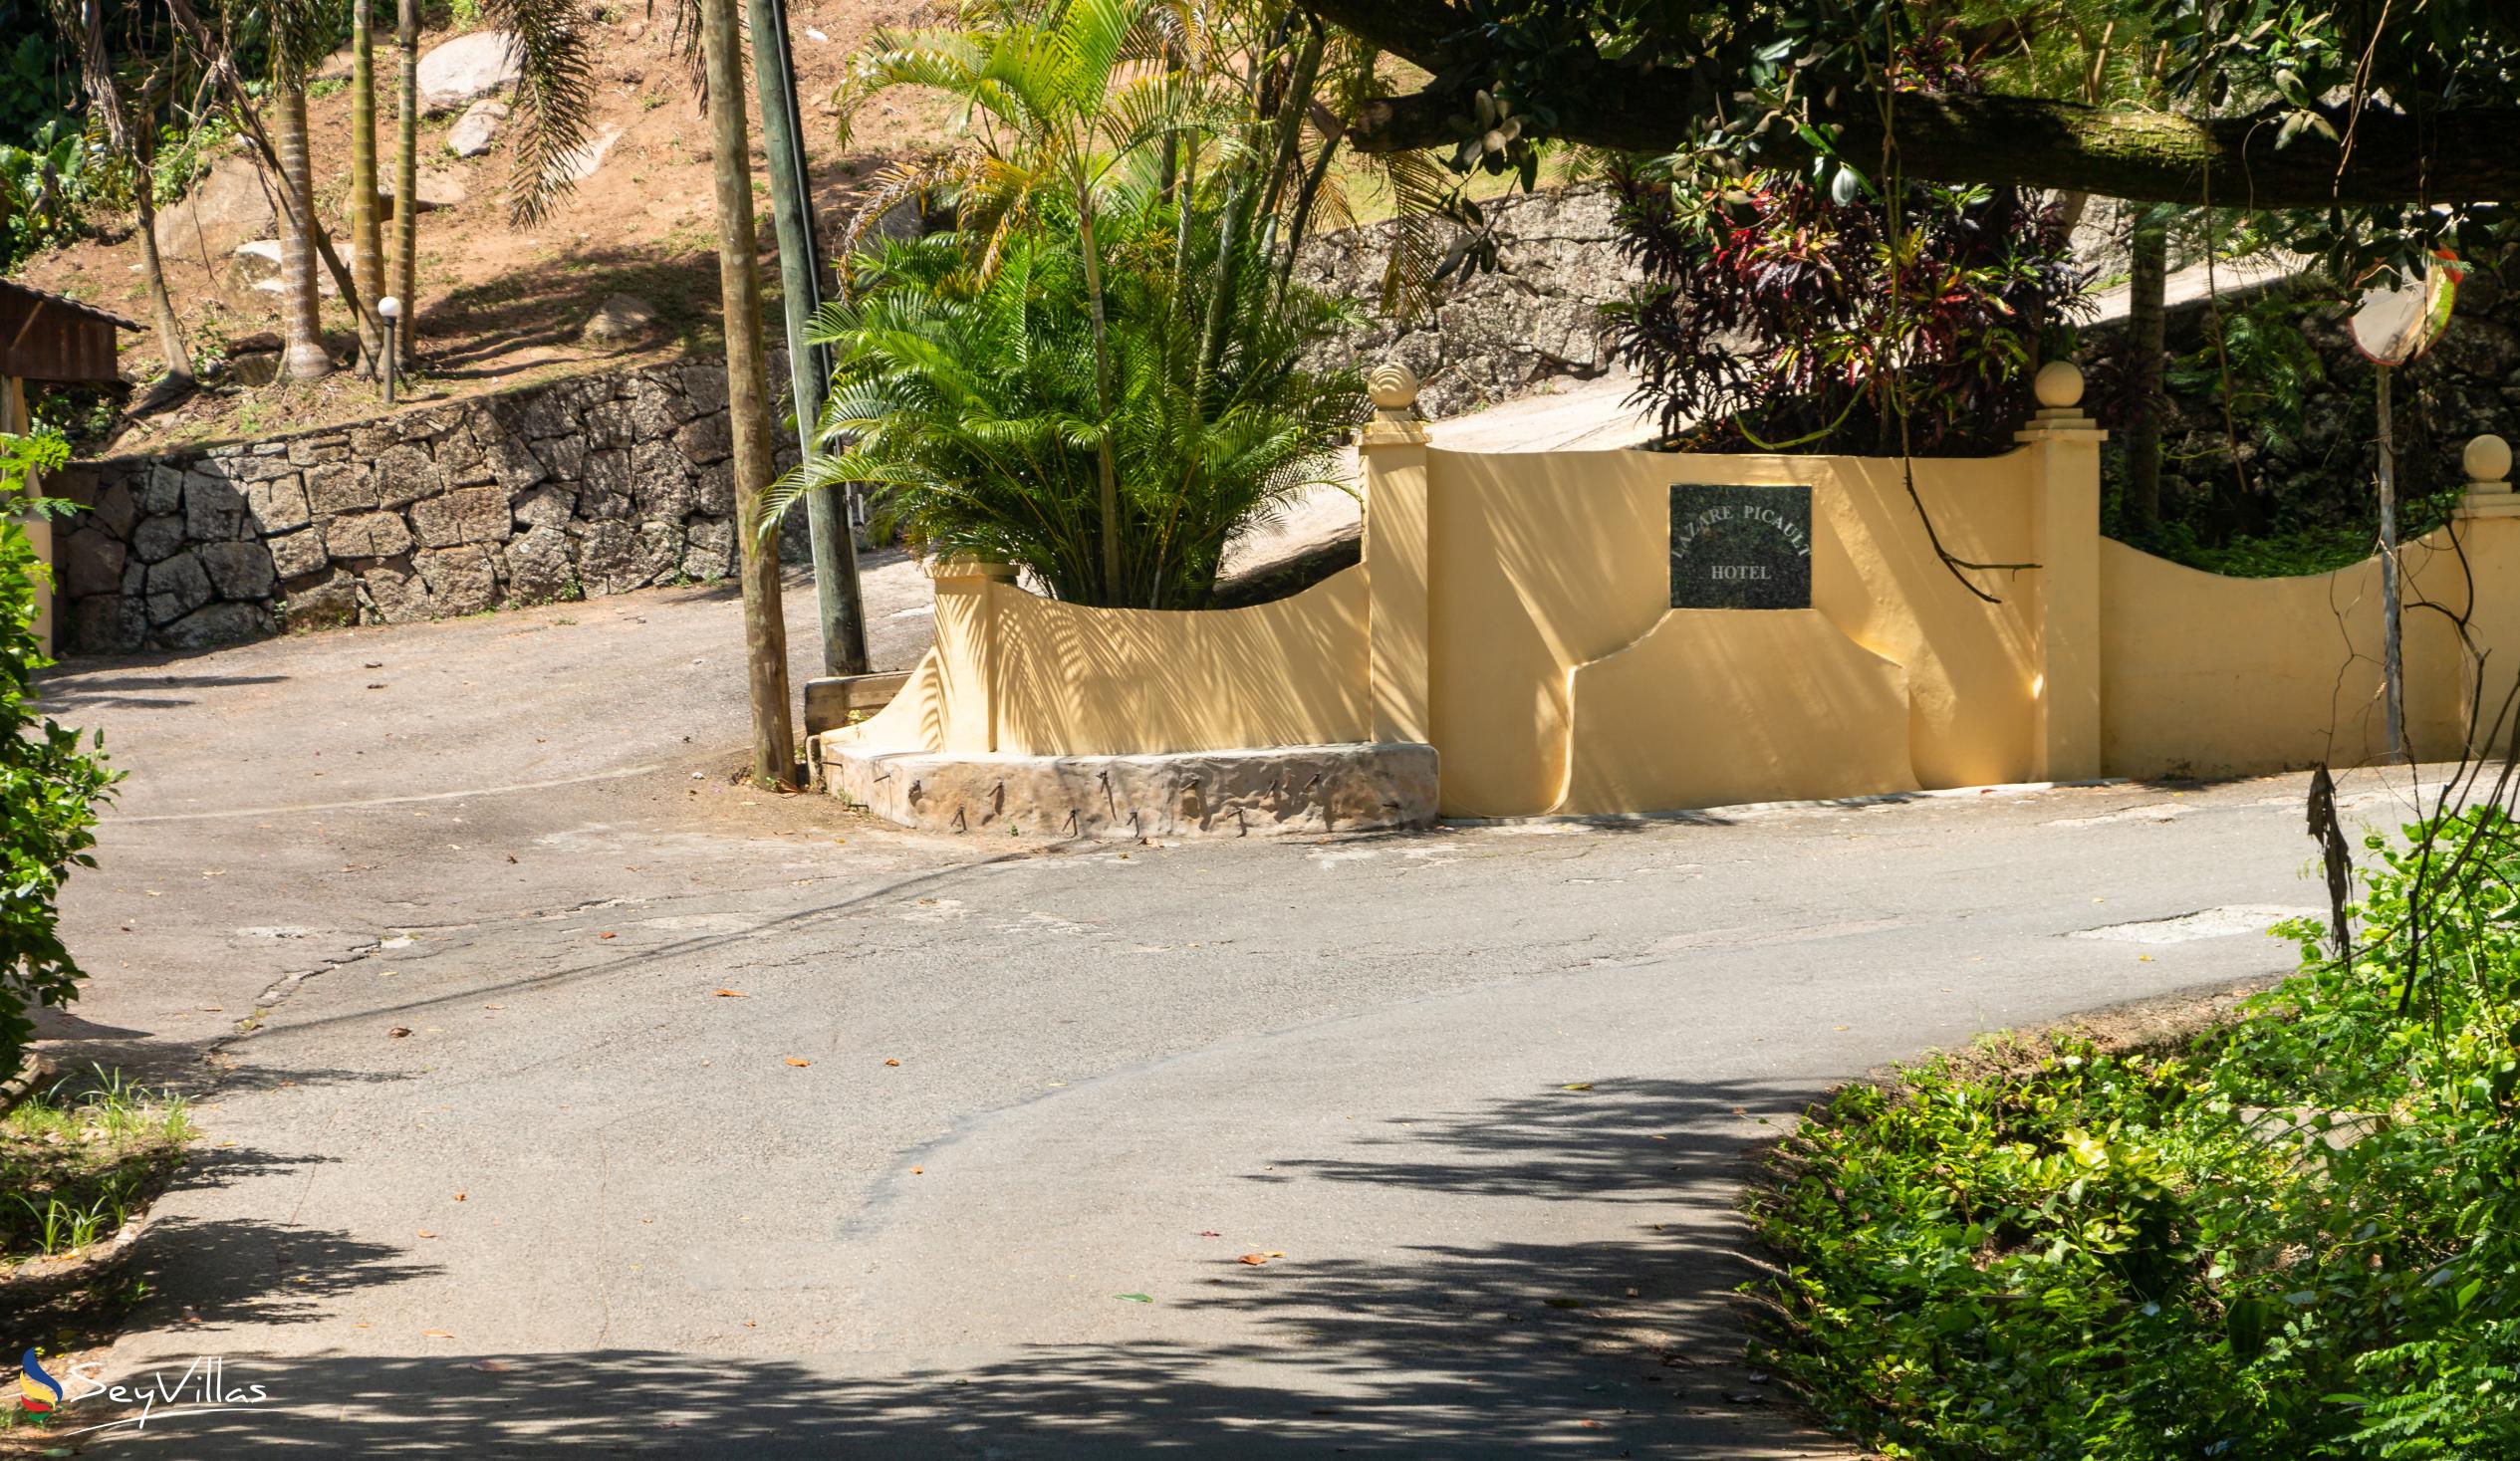 Foto 54: Lazare Picault Hotel - Location - Mahé (Seychelles)